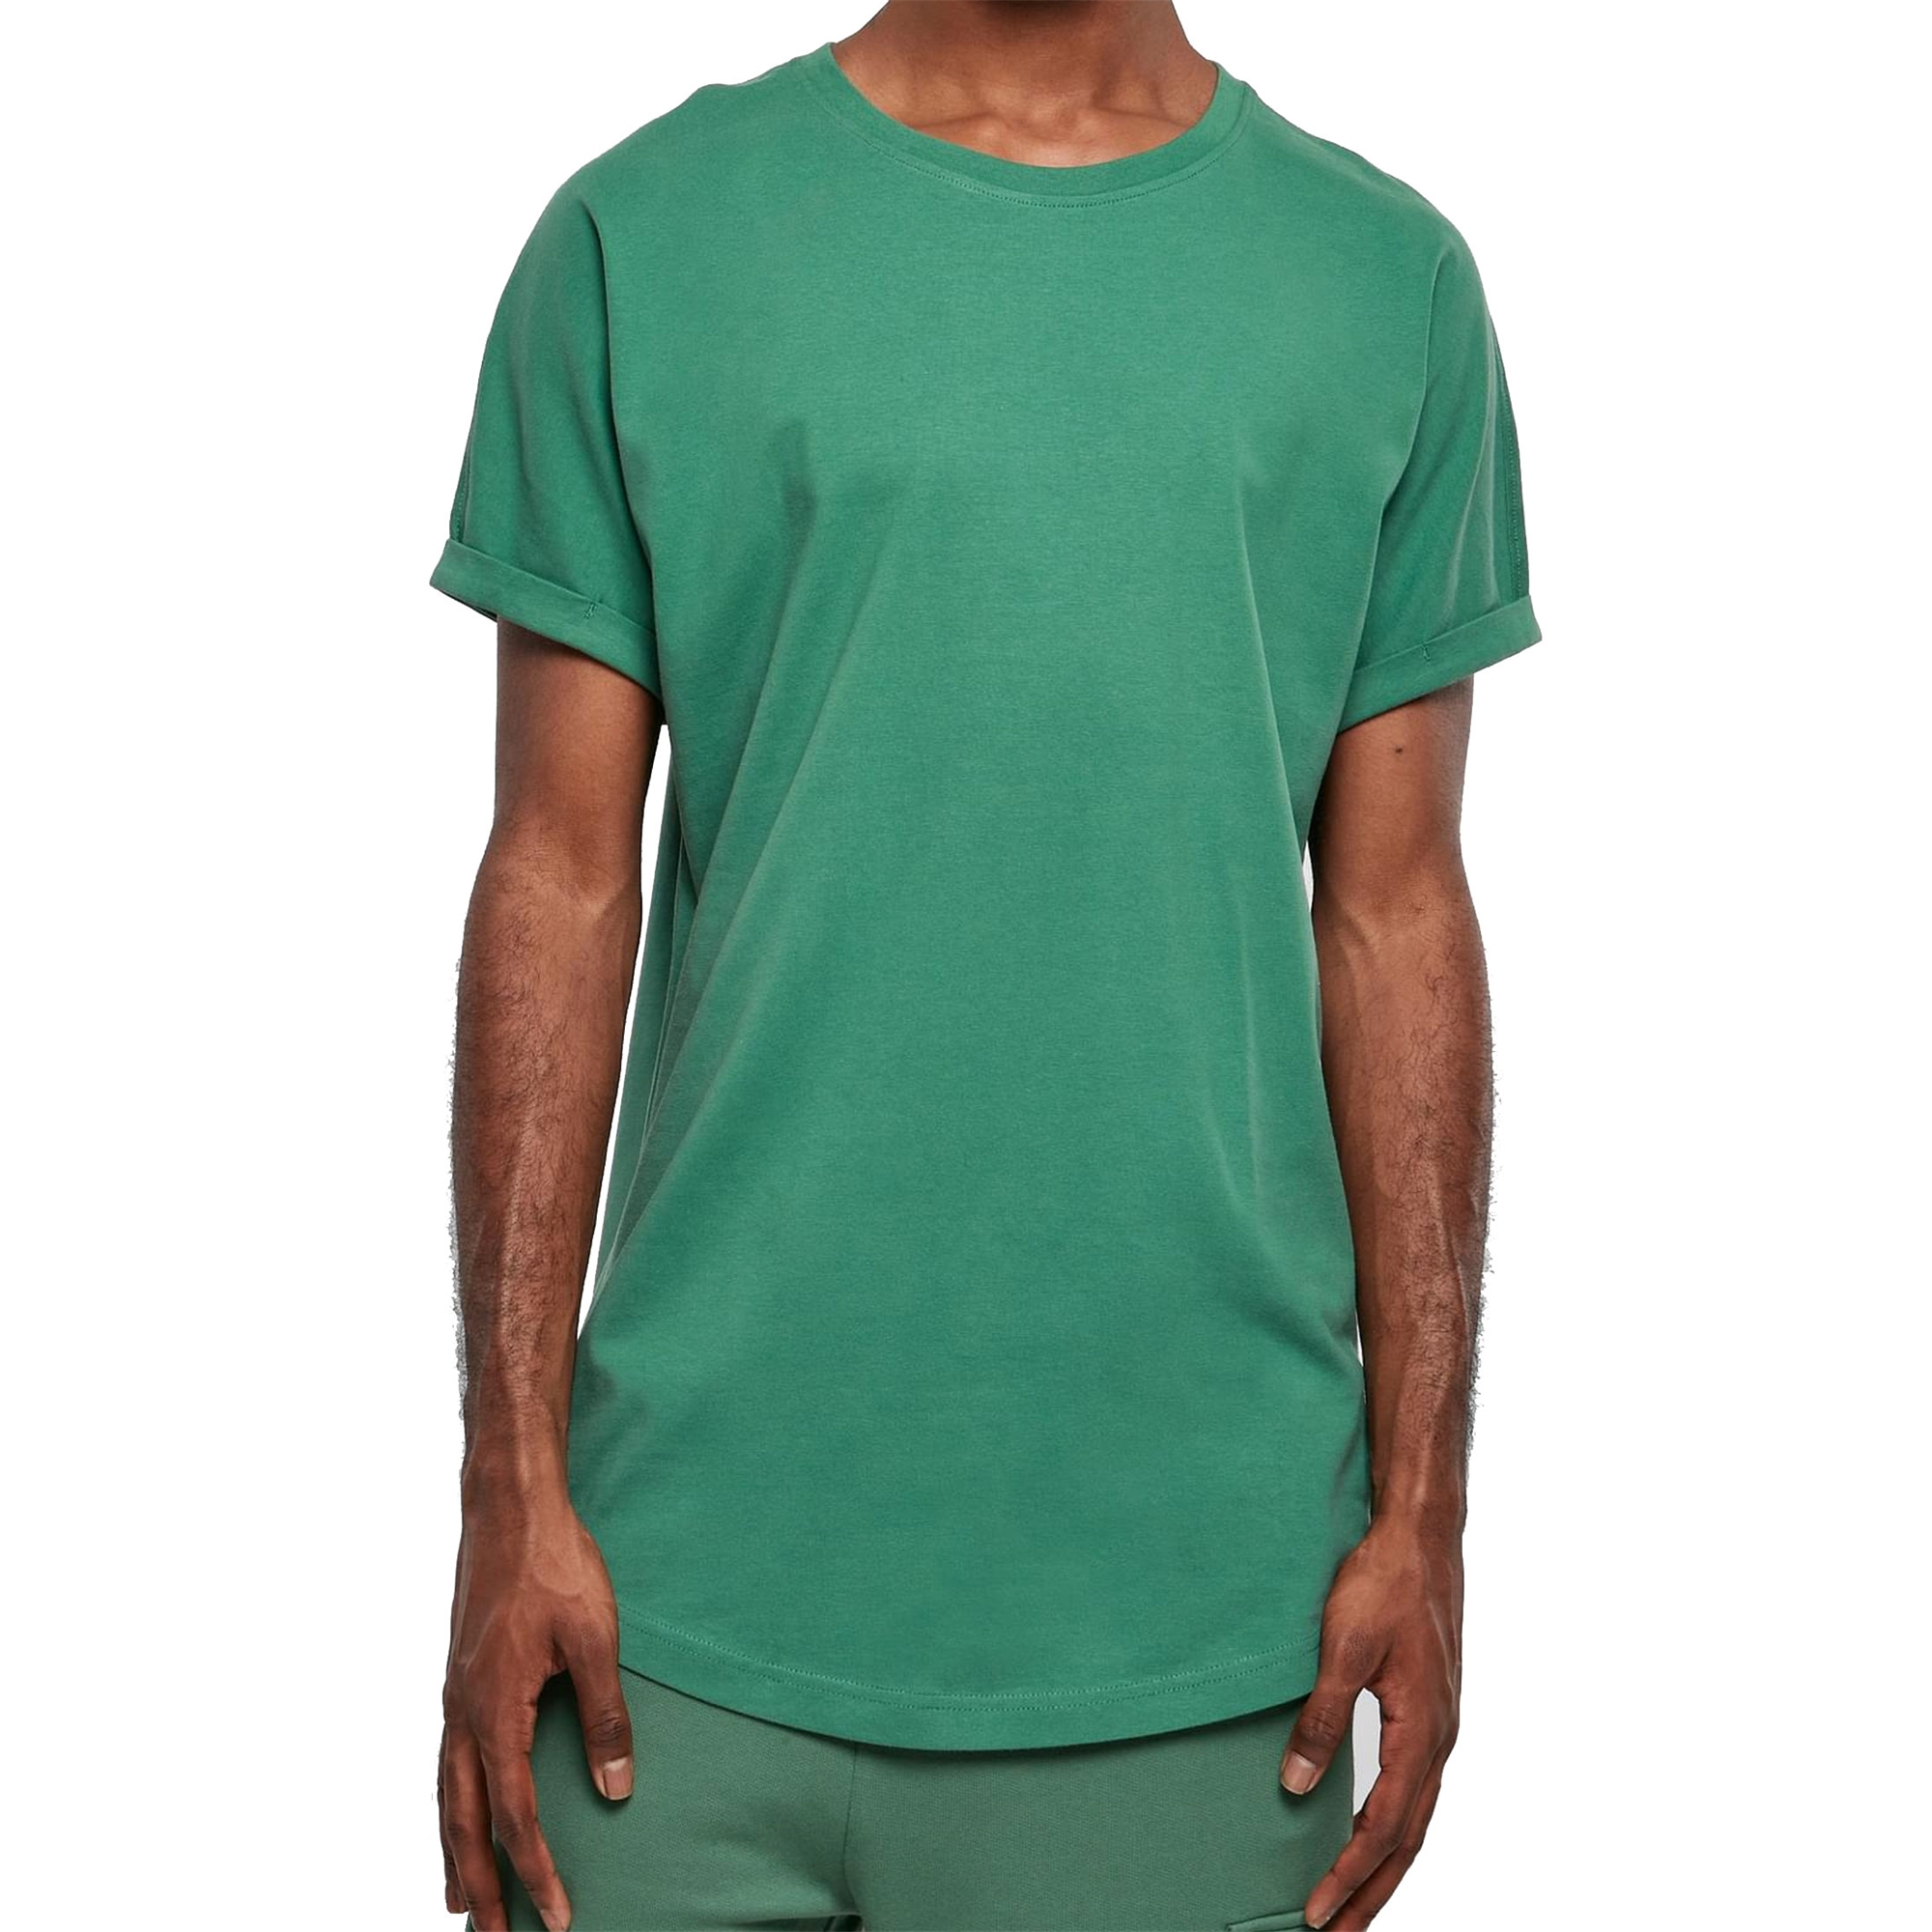 Urban Classics Herren T-Shirt Shaped extra Shirt | eBay lang Turnup Tee oversize Long